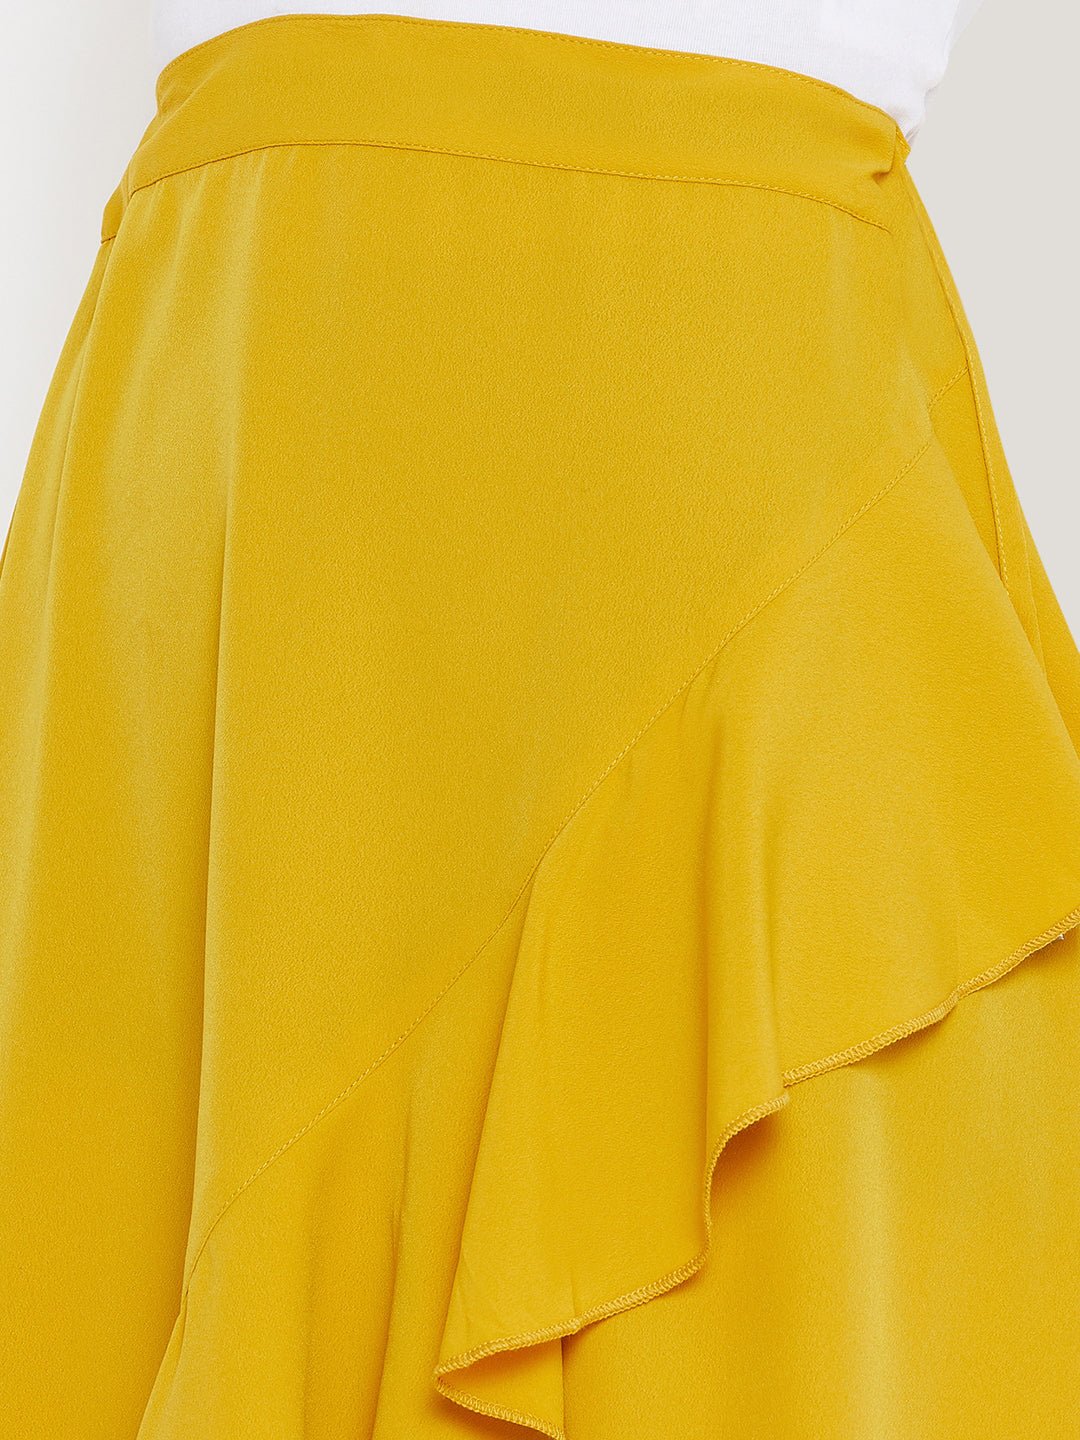 Folk Republic Women Solid Yellow High-Low Ruffled Wrap Midi Skirt - #folk republic#